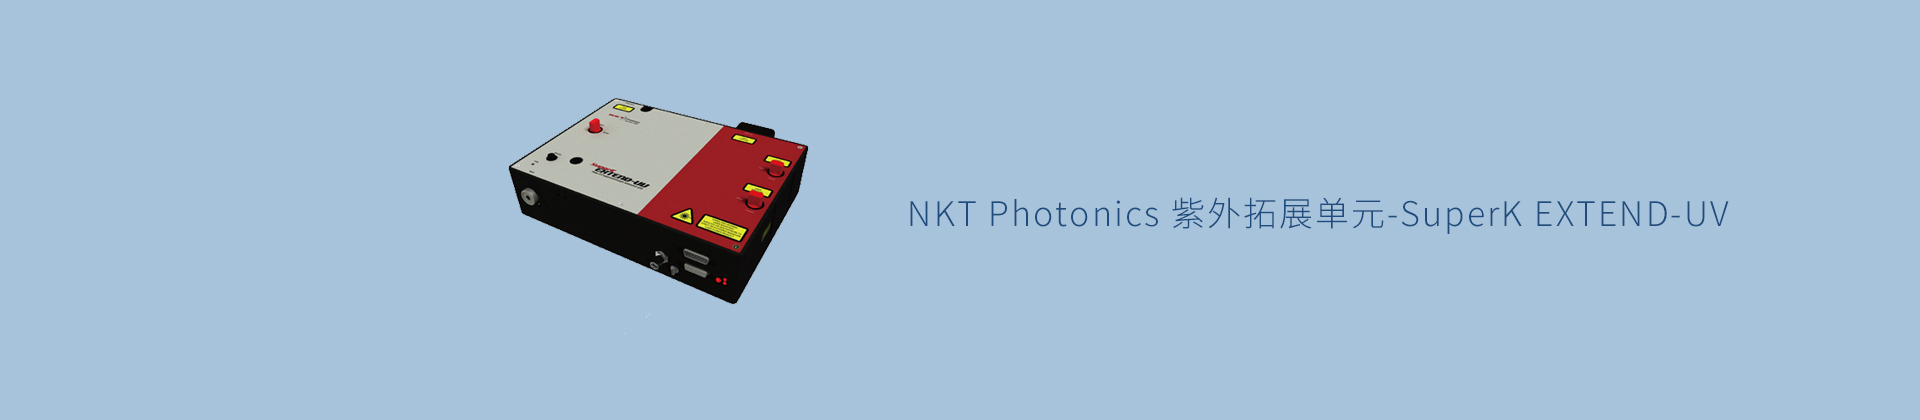 NKT Photonics 紫外拓展单元-SuperK EXTEND-UV